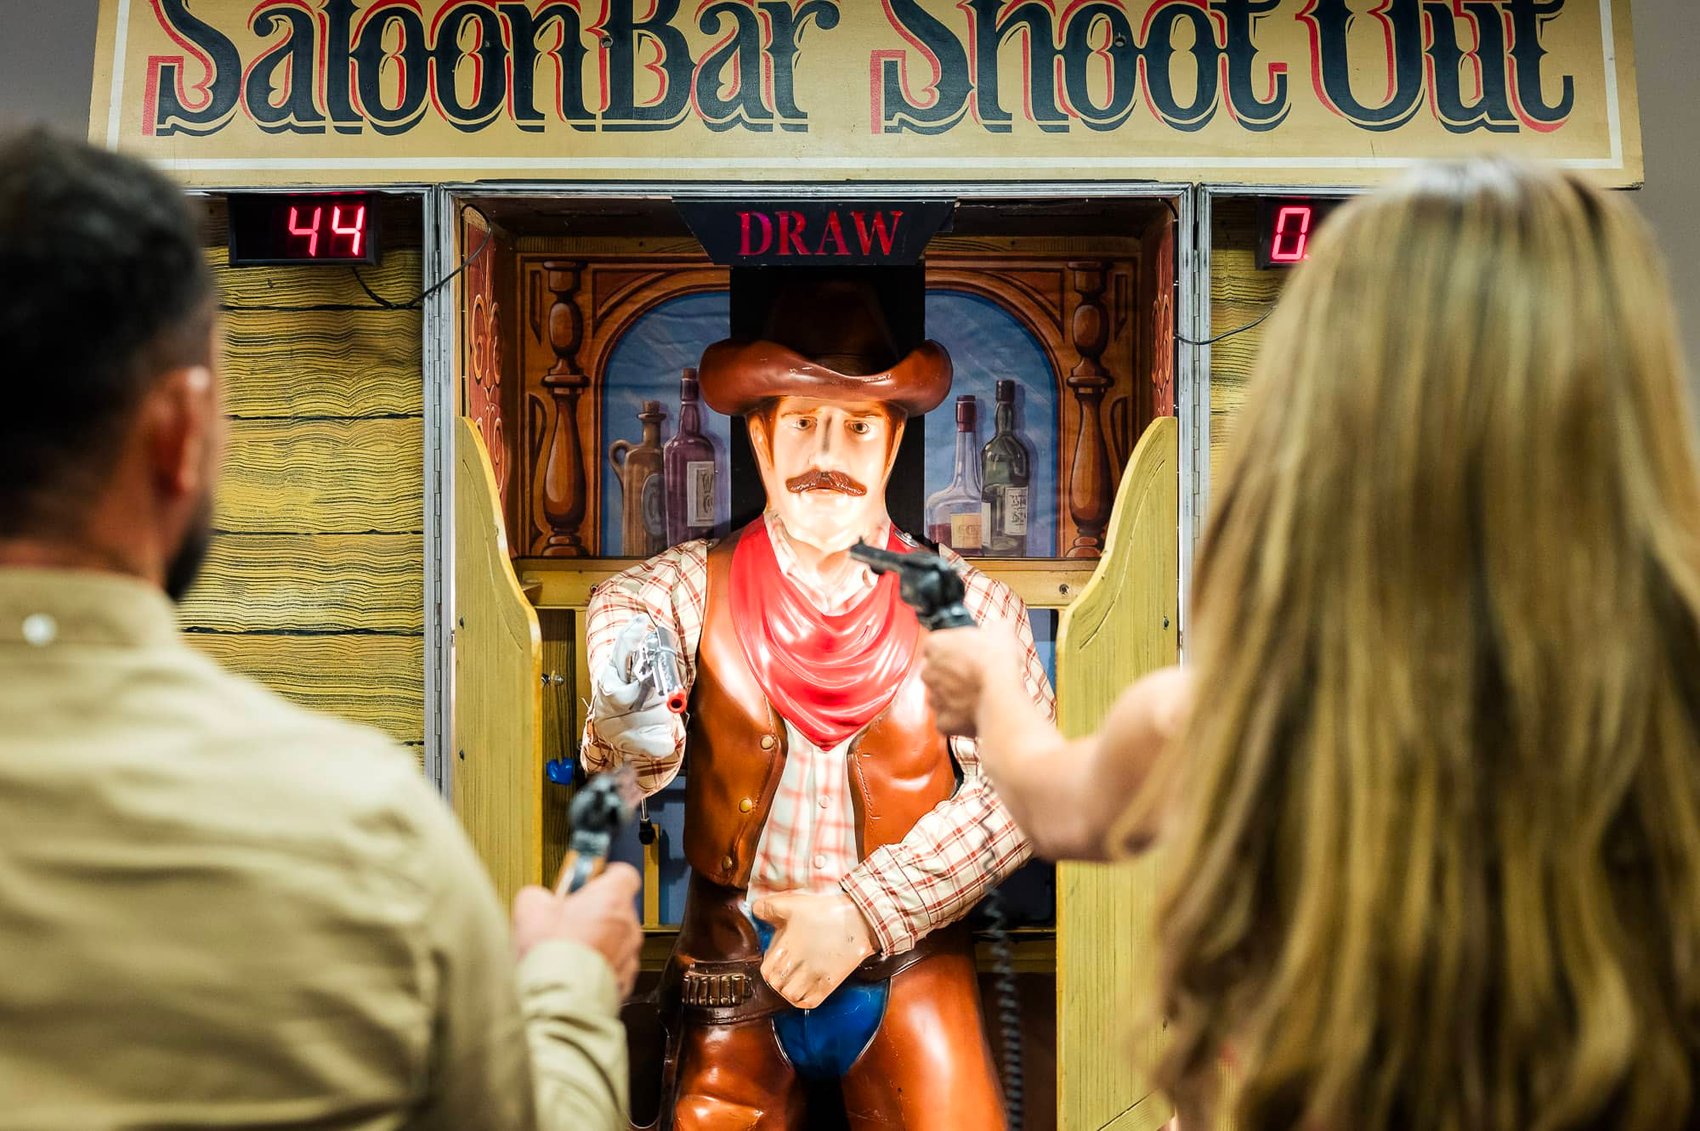 Saloon bar shooting arcade game at wedding